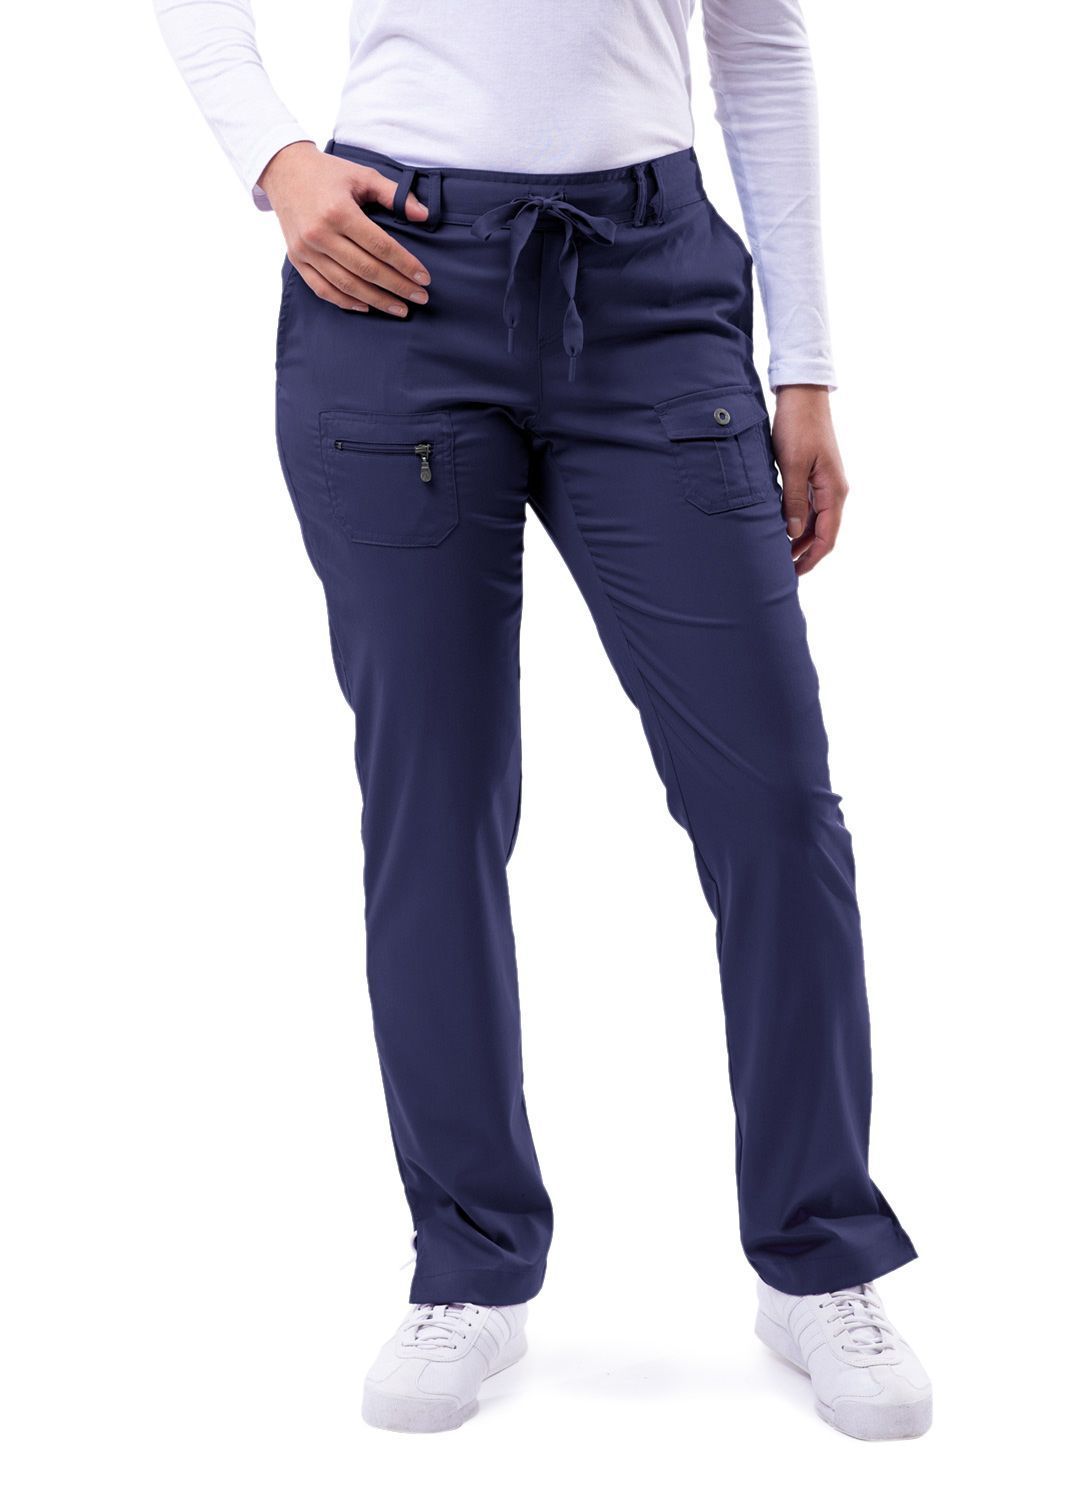 Clearance Adar Pro Petite Slim Fit 6-Pocket Pants